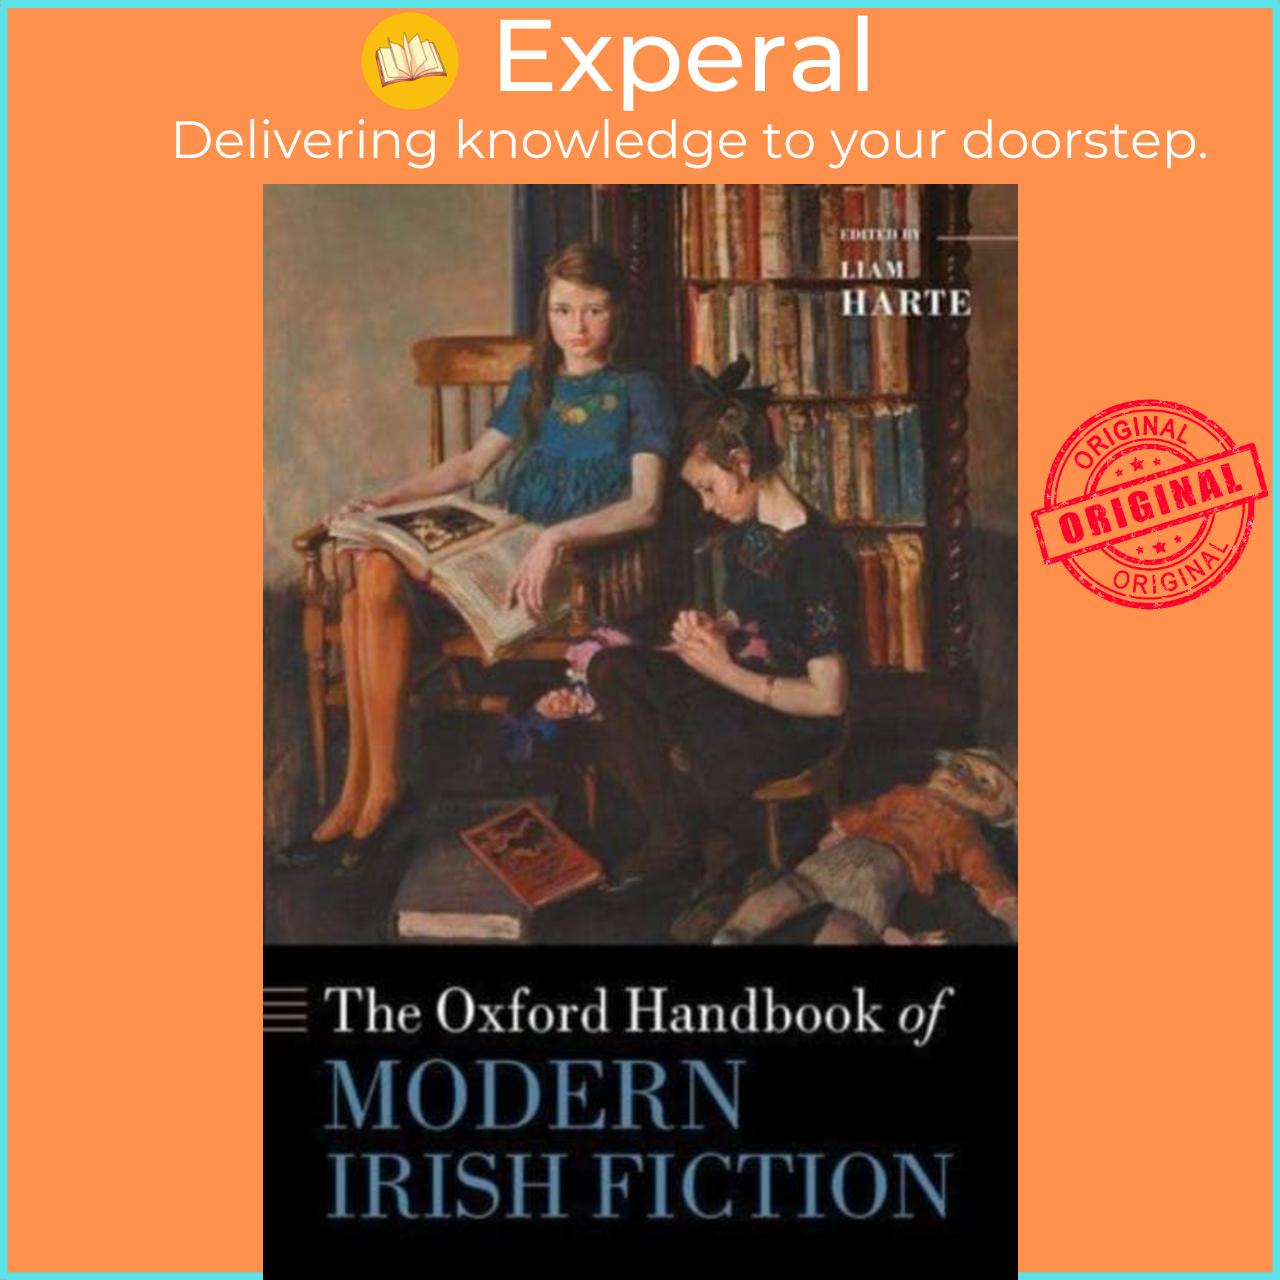 Sách - The Oxford Handbook of Modern Irish Fiction by Liam Harte (UK edition, paperback)